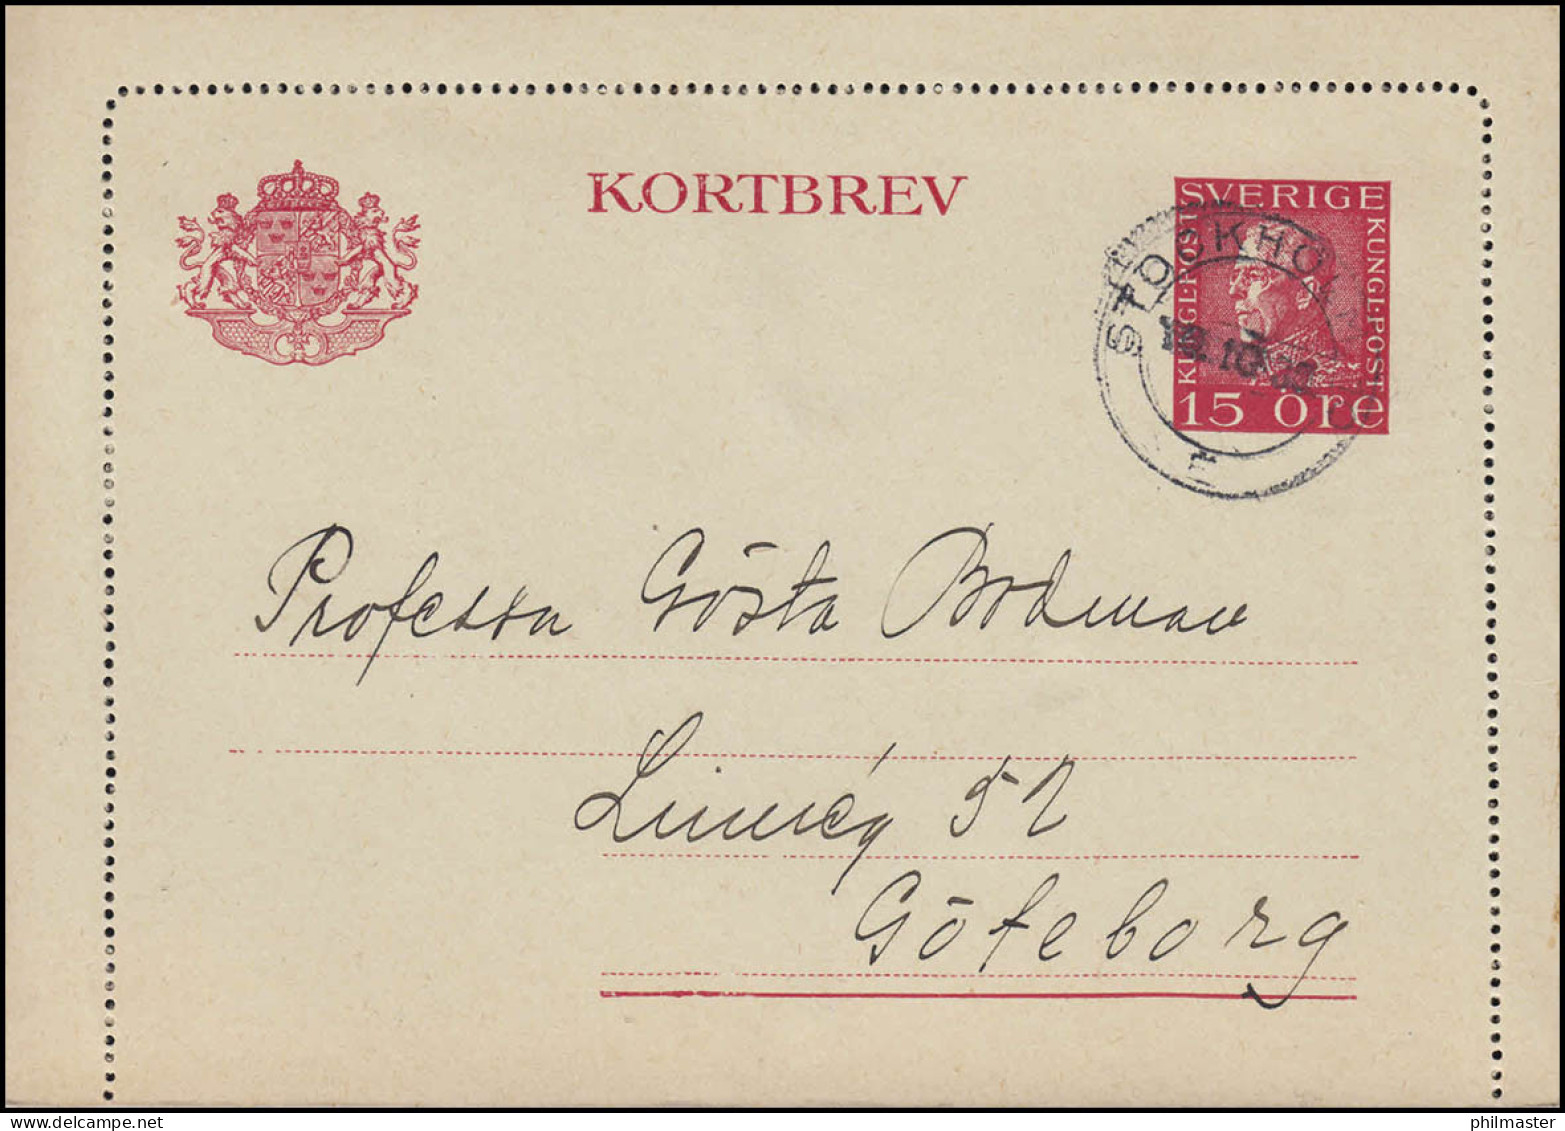 Kartenbrief K 27IW KORTBREV 15 Öre, STOCKHOLM 10.10.1930 Nach Göteborg - Entiers Postaux